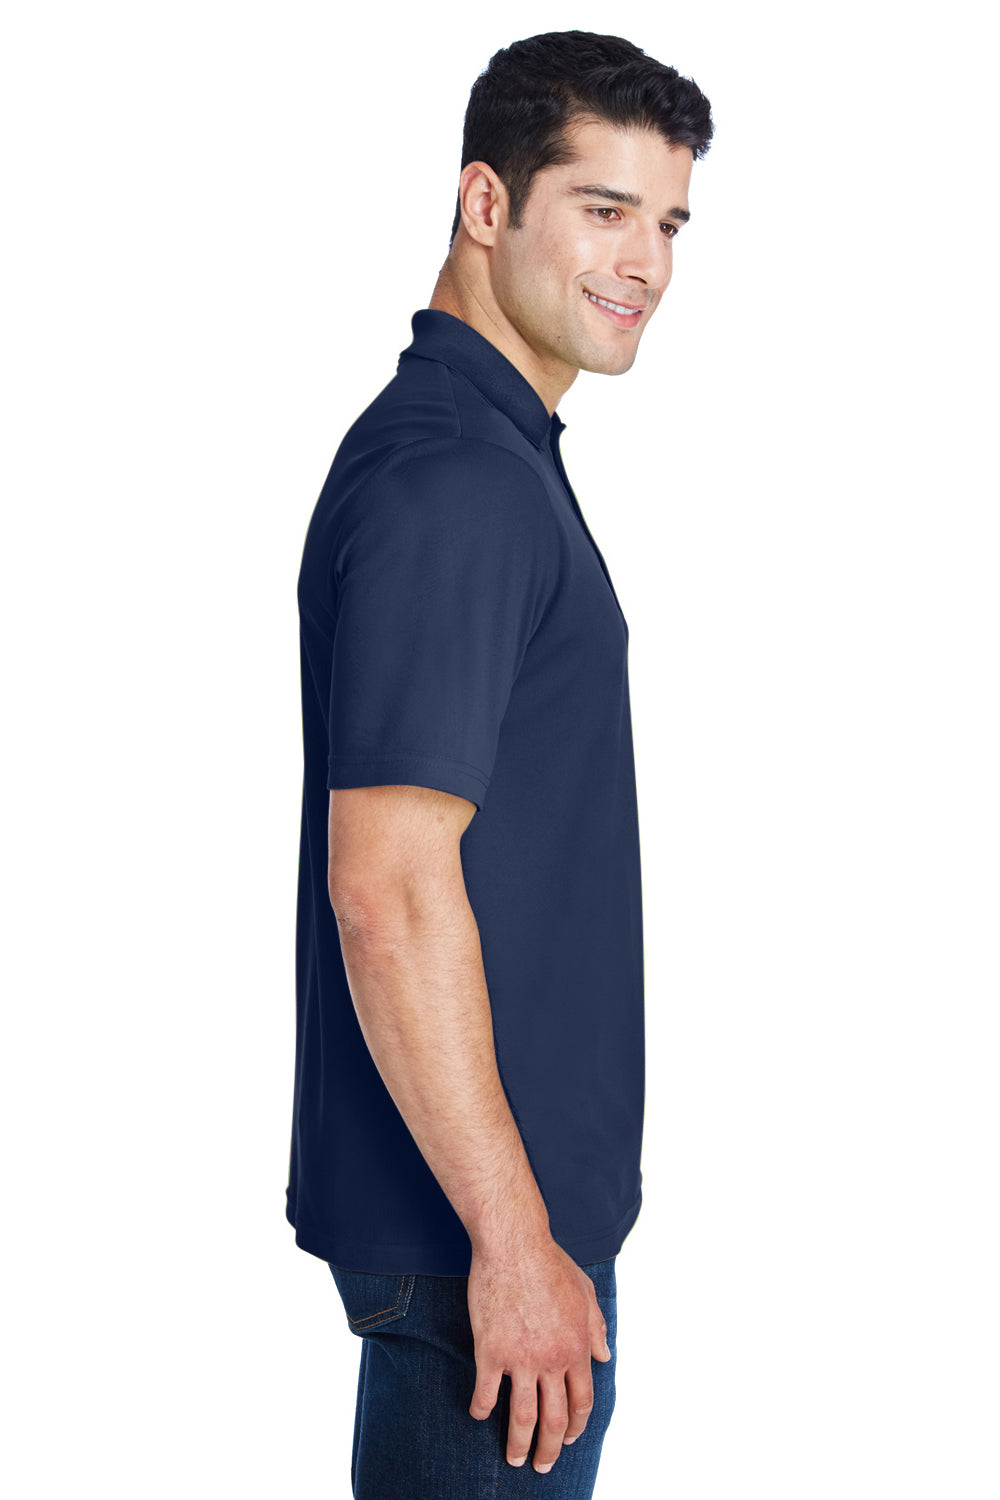 Core 365 88181 Mens Origin Performance Moisture Wicking Short Sleeve Polo Shirt Navy Blue Side